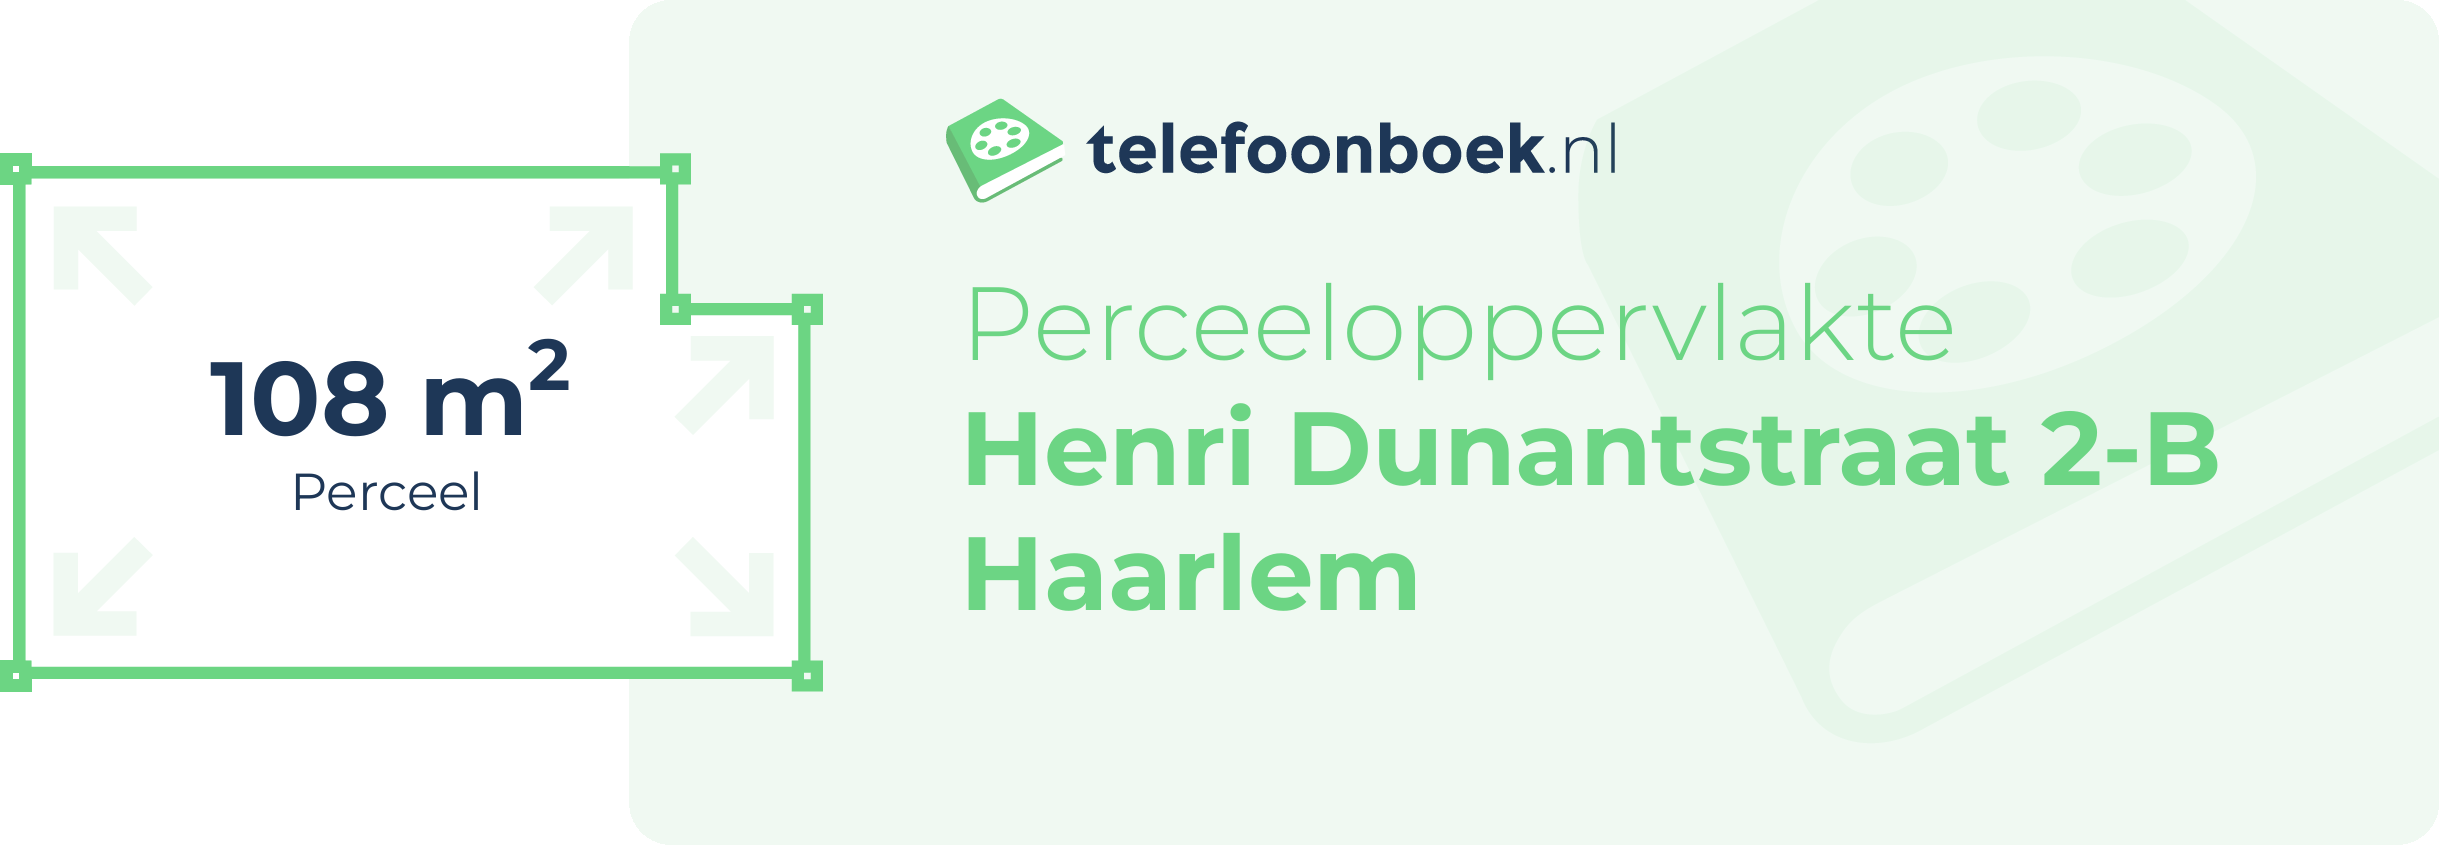 Perceeloppervlakte Henri Dunantstraat 2-B Haarlem